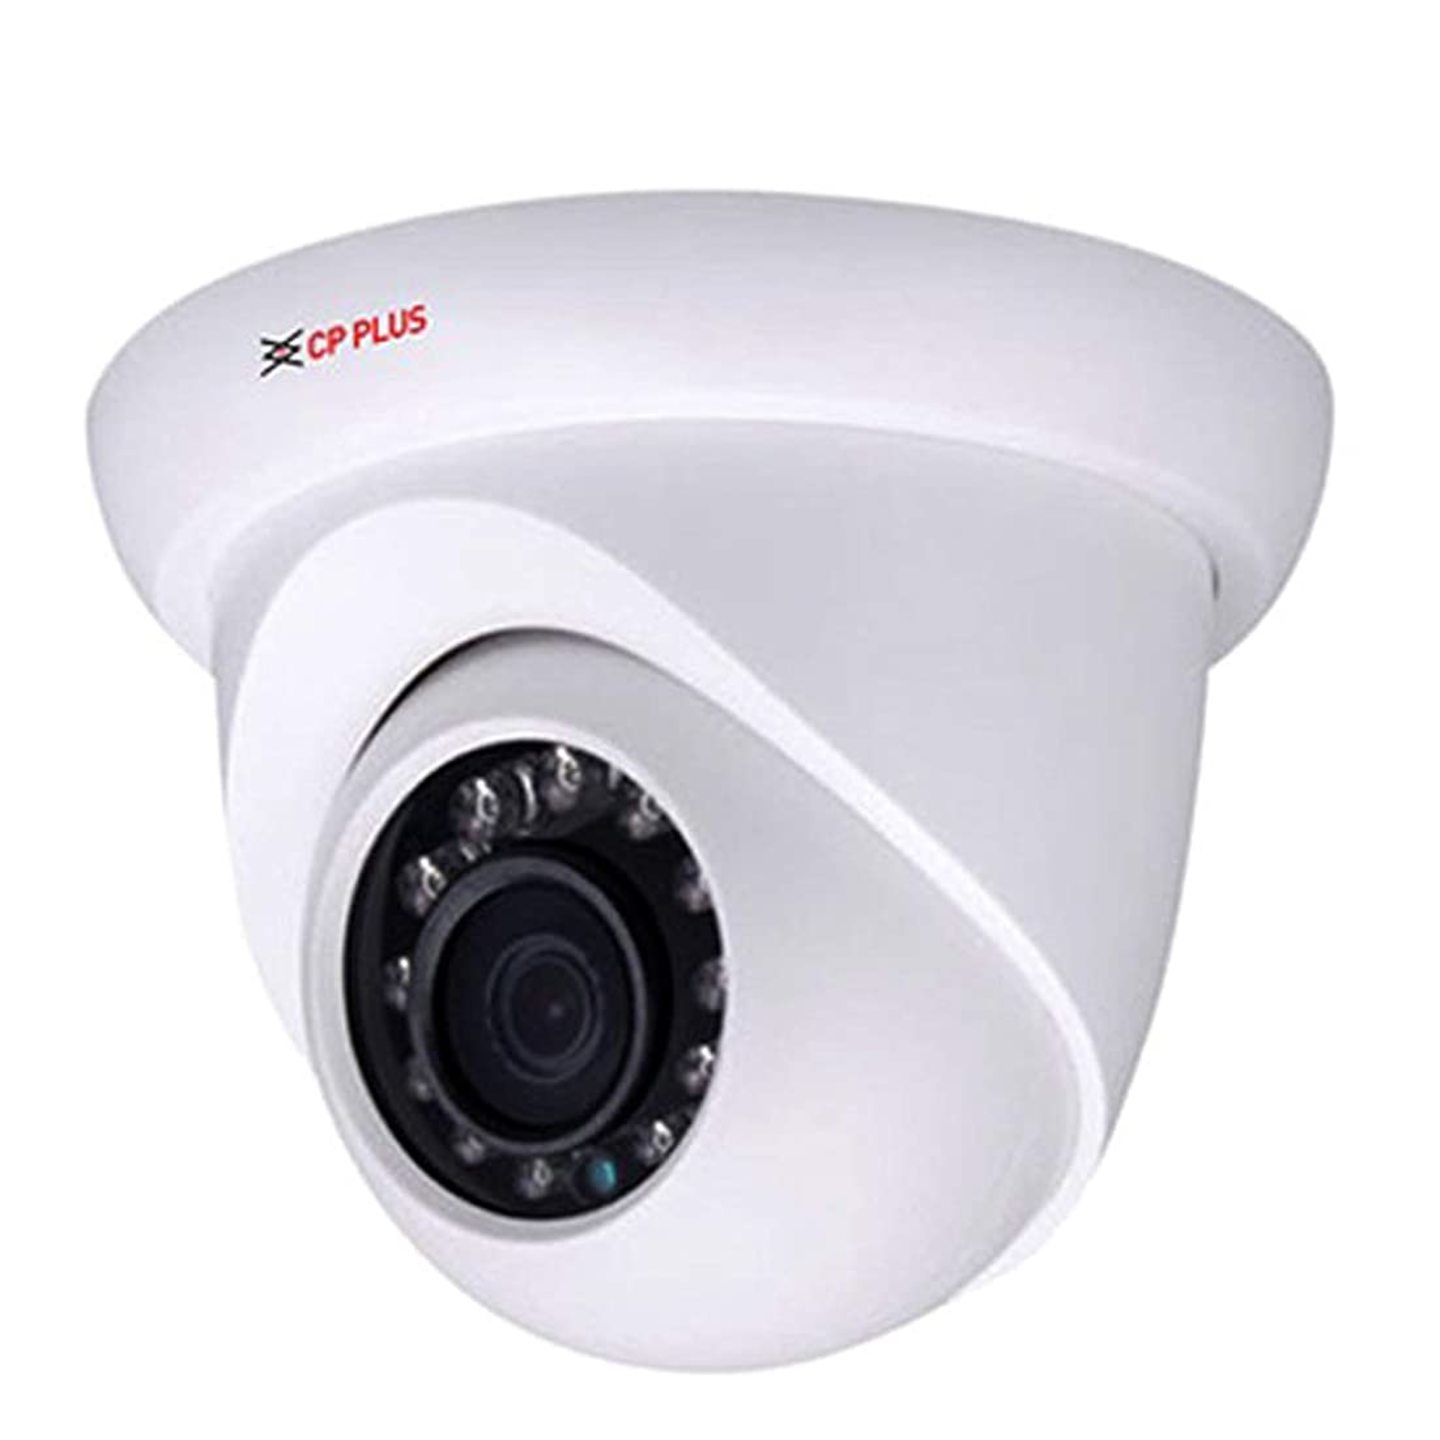 CP PLUS Infrared 1080p FHD 2.4MP Security Camera